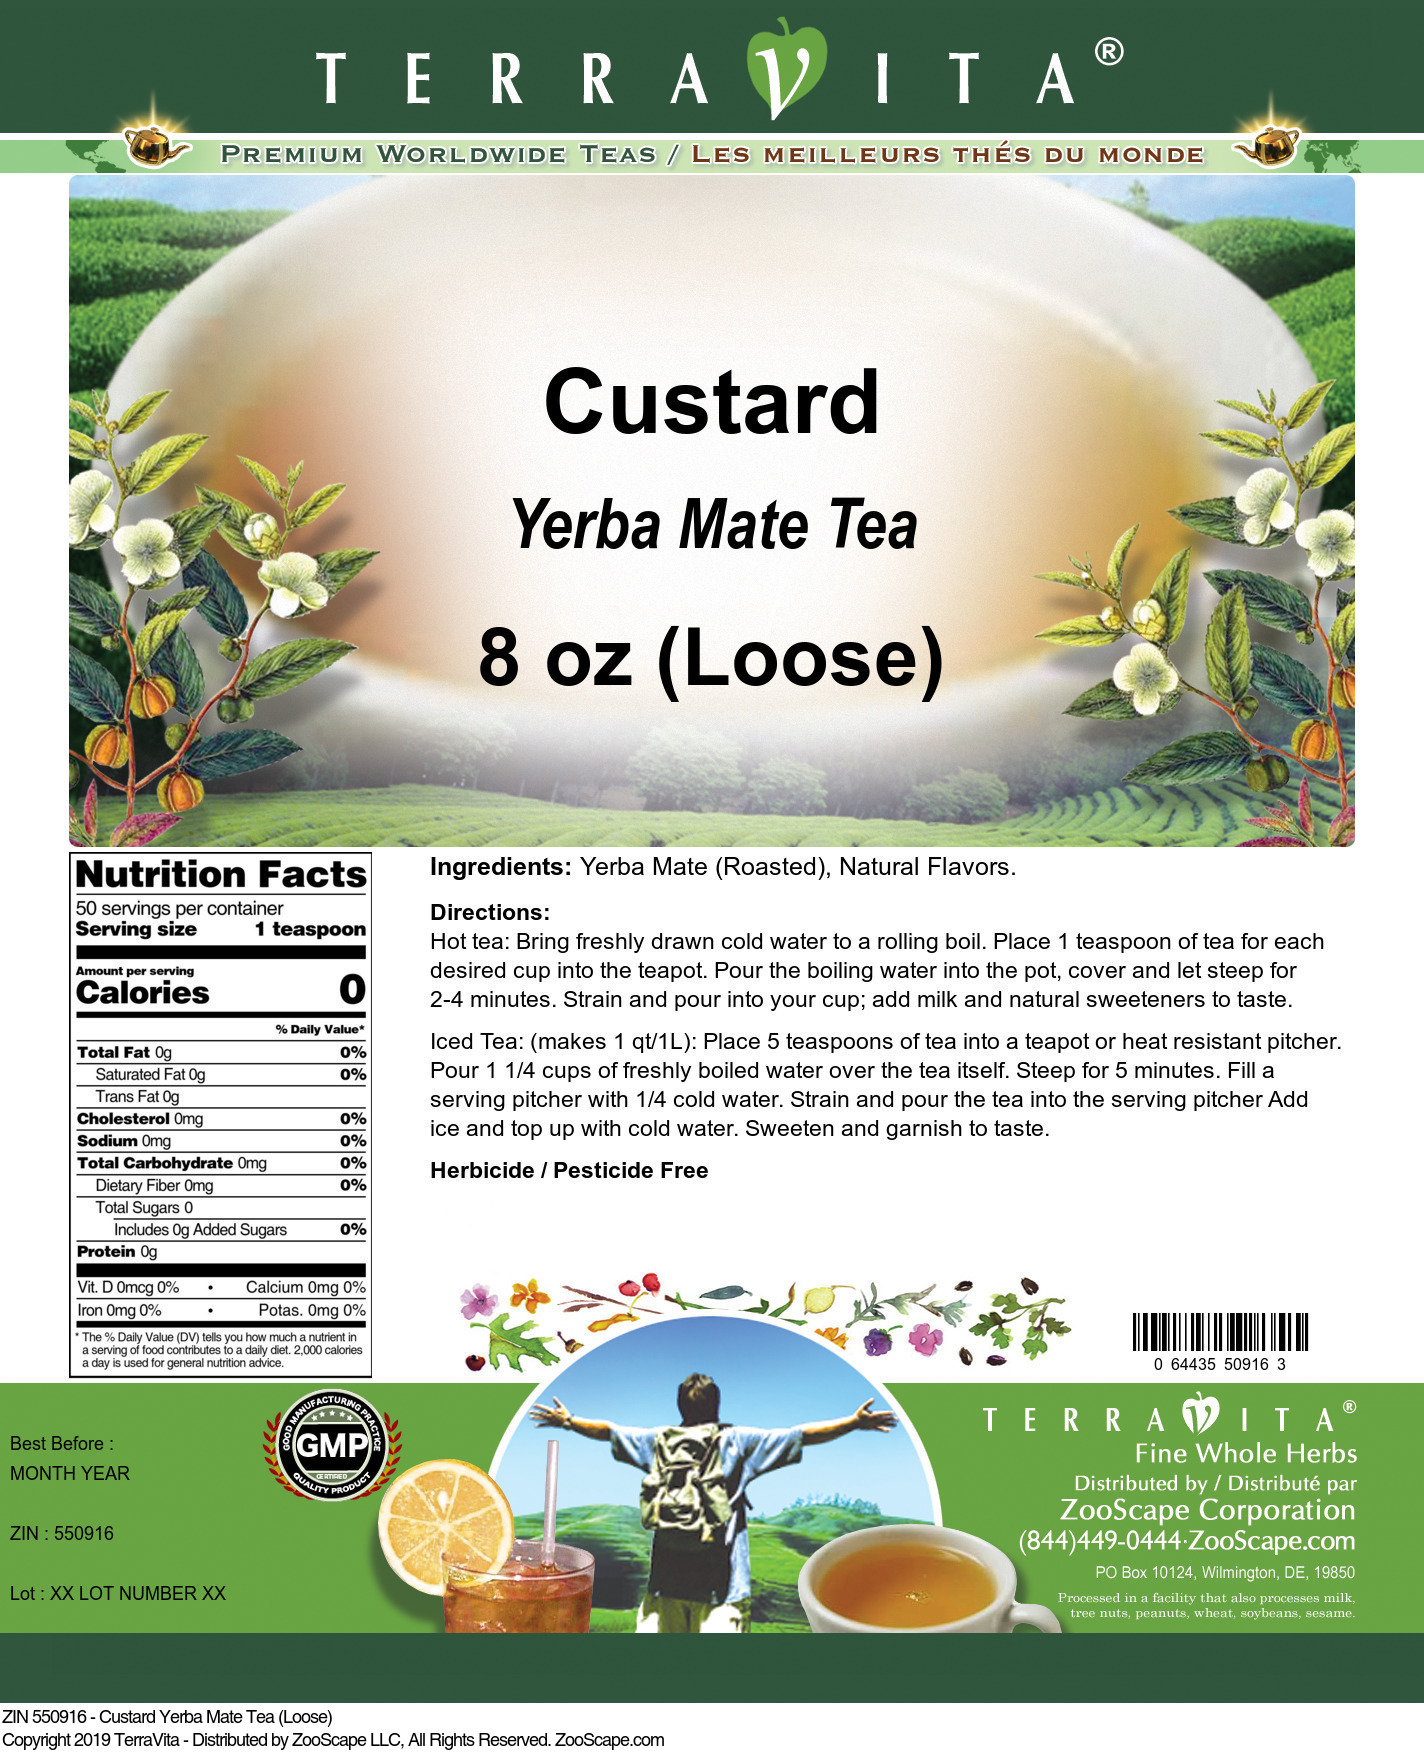 Custard Yerba Mate Tea (Loose) - Label